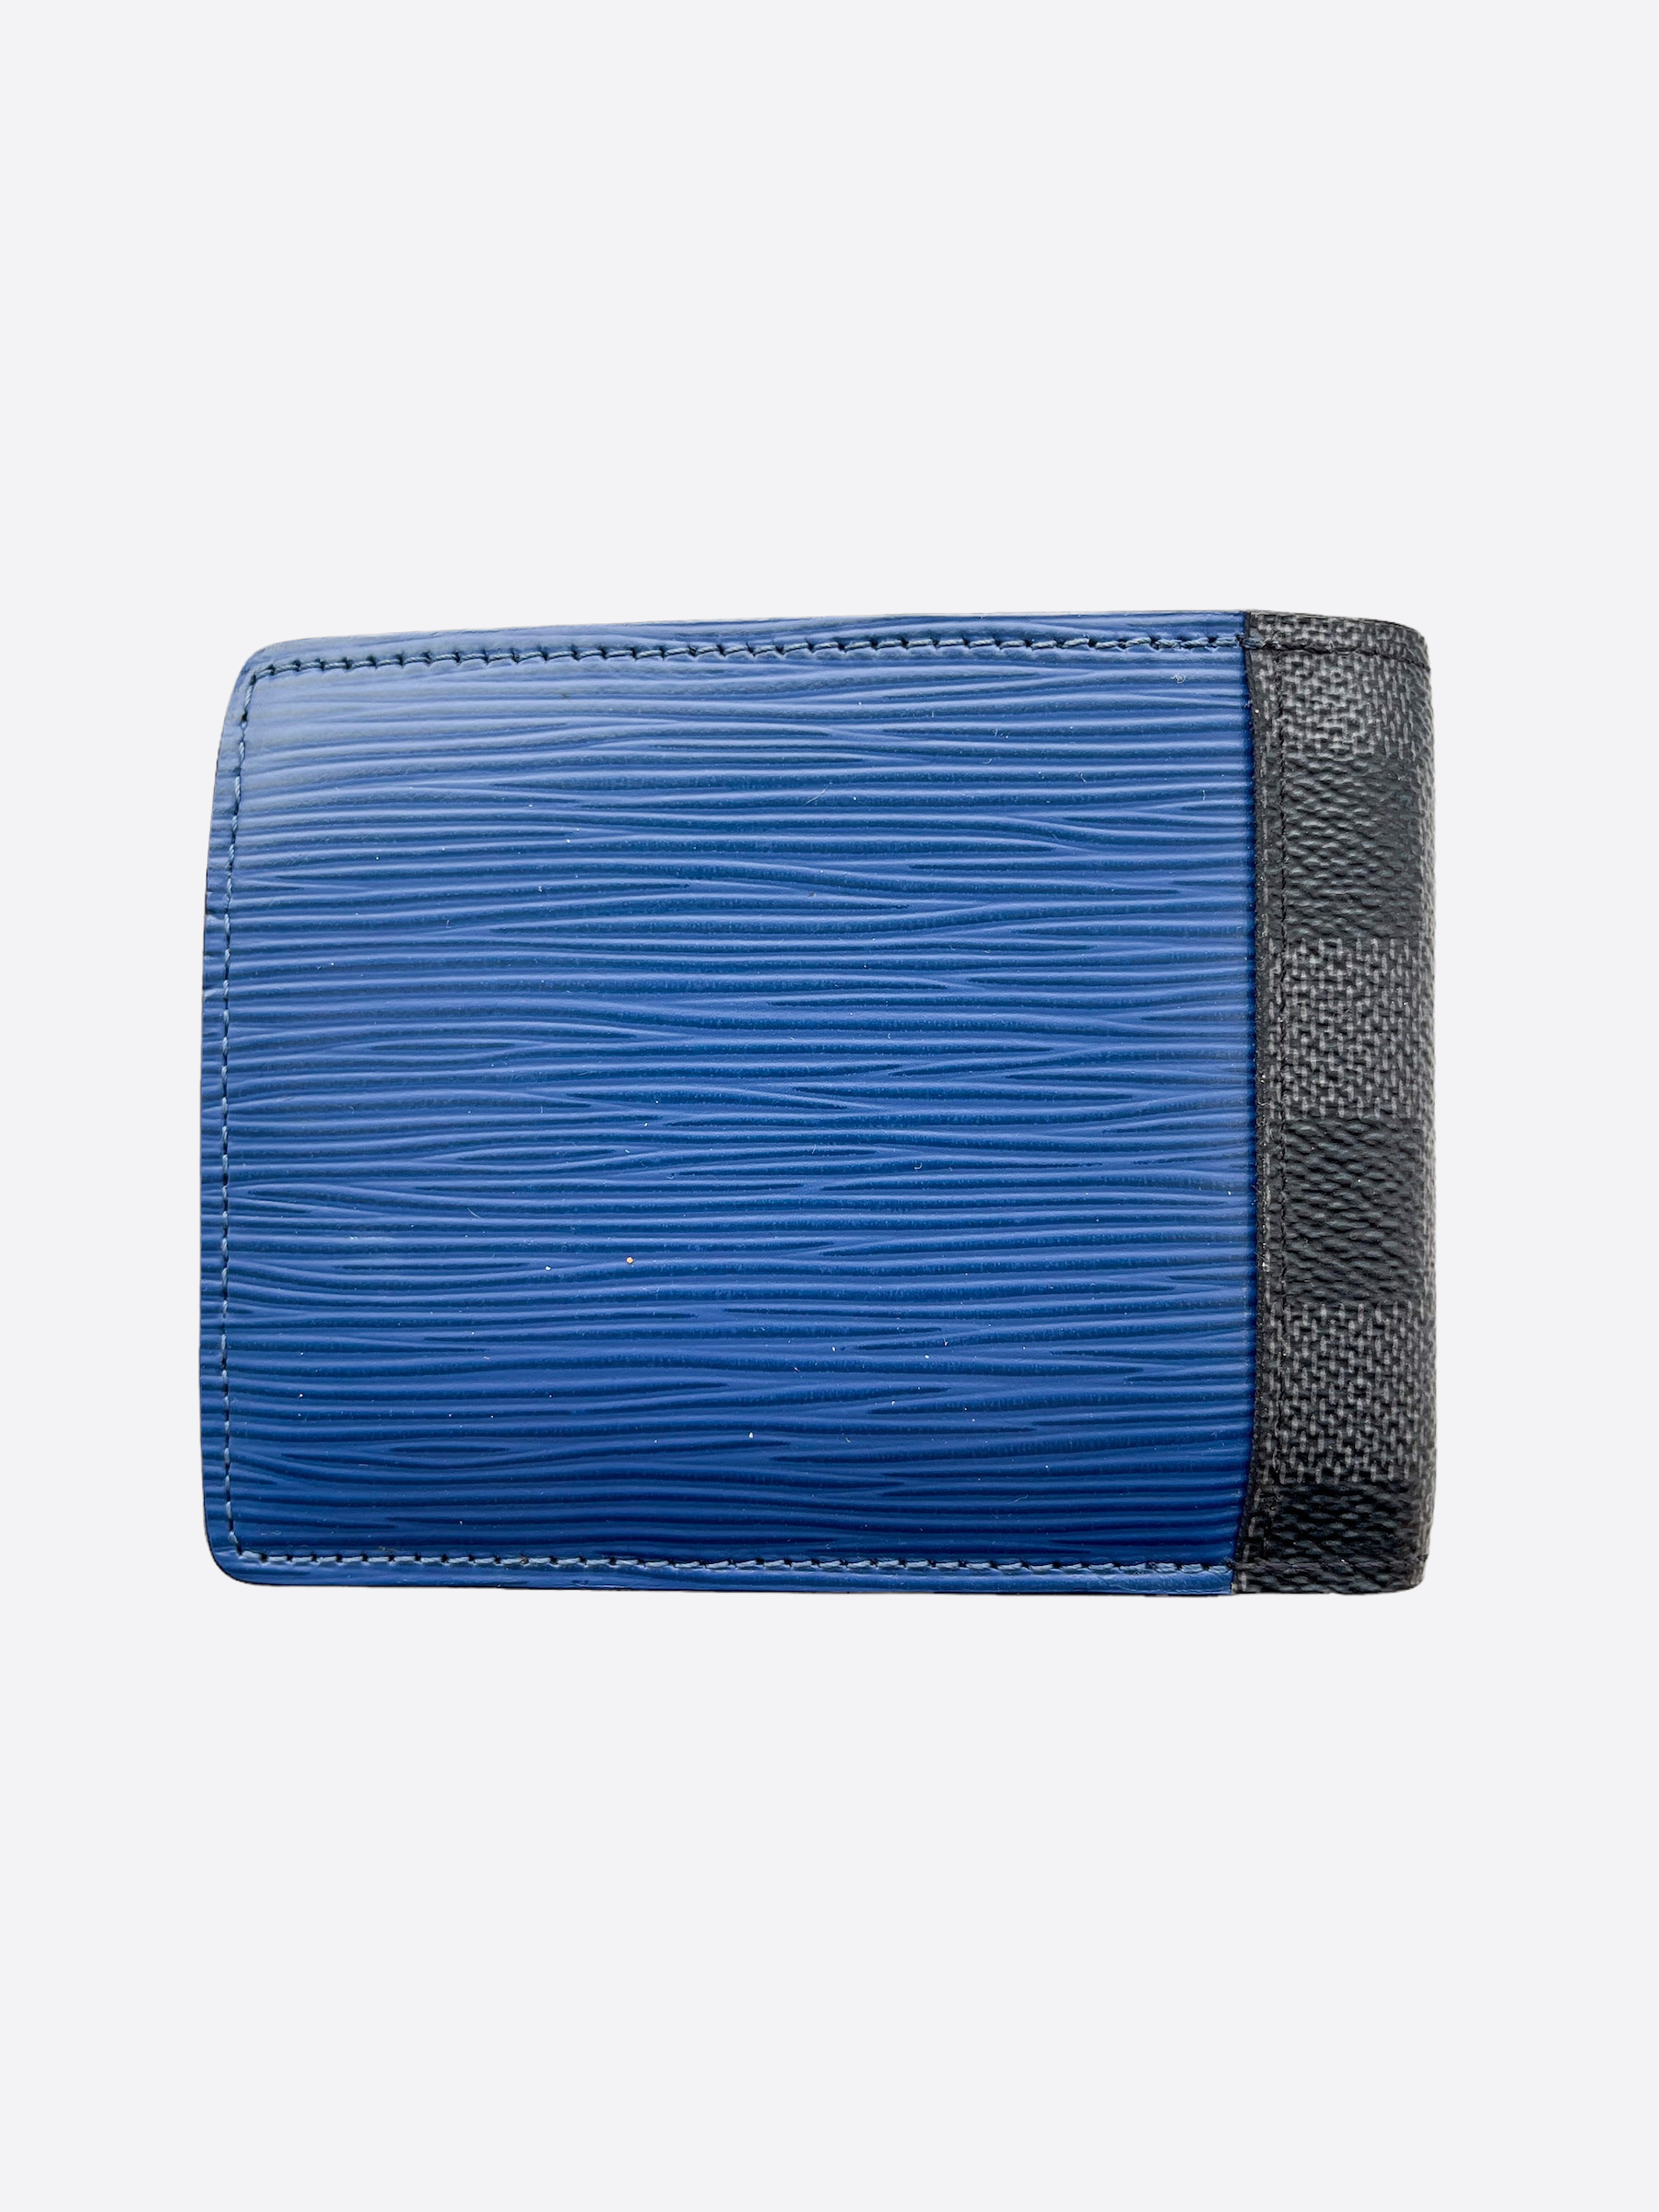 Louis Vuitton Multiple Wallet in EPI Leather Black